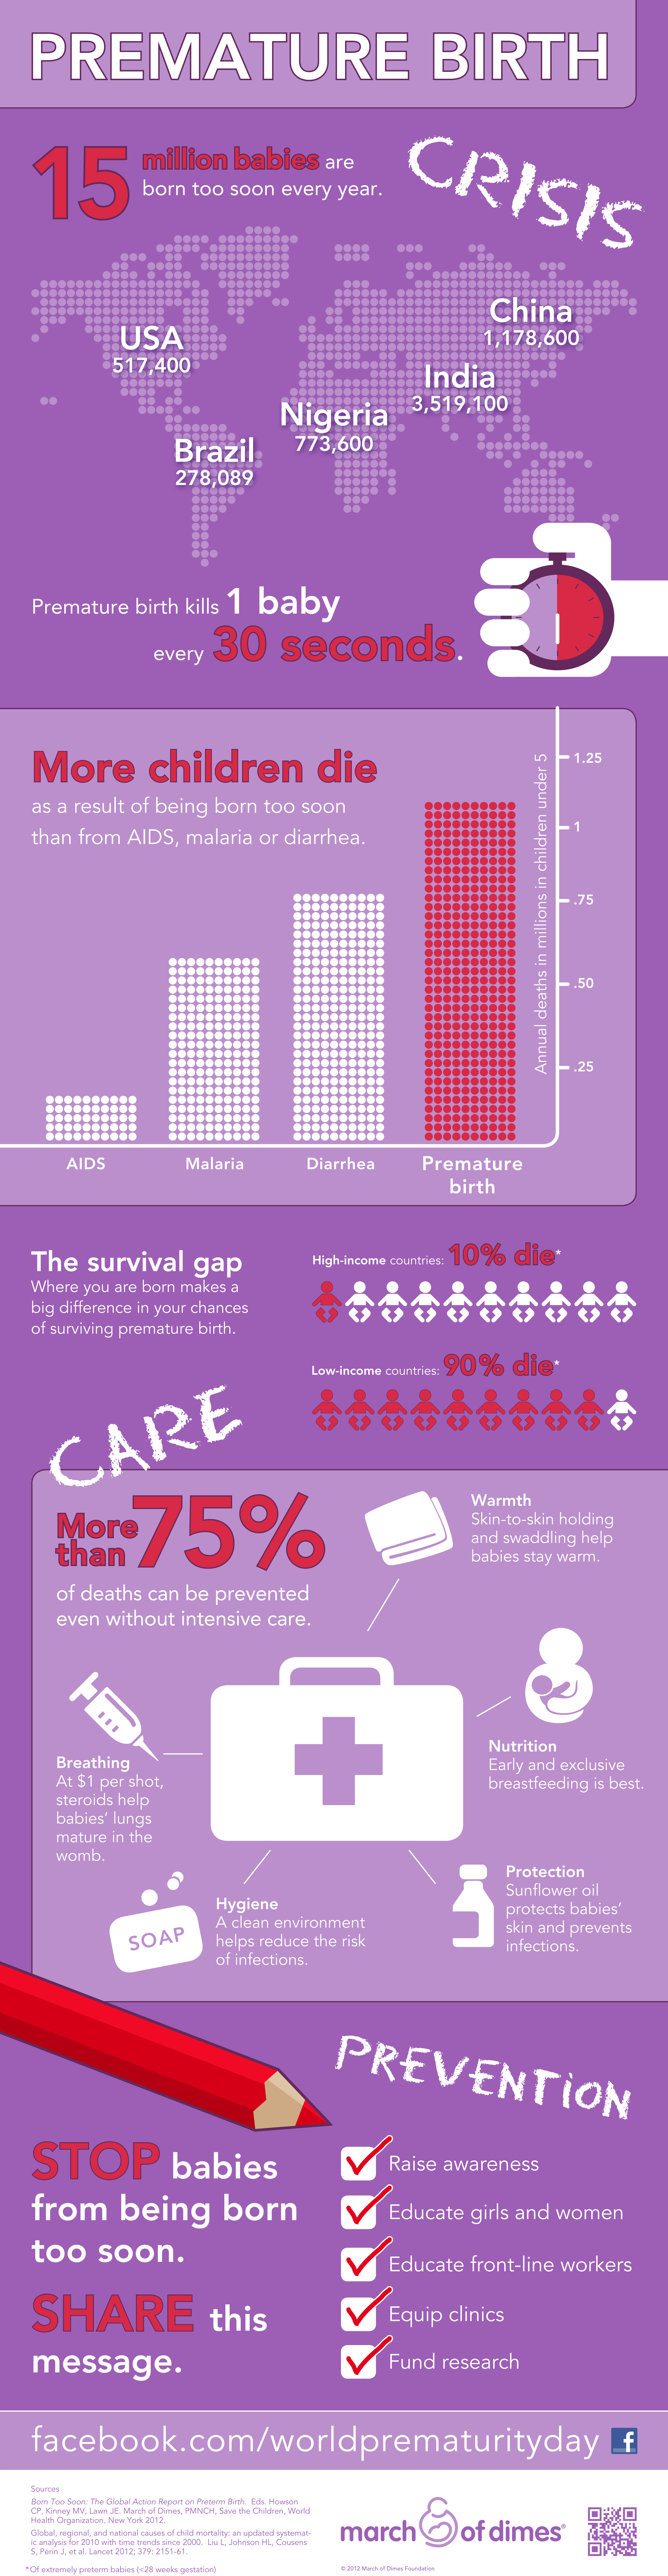 world prematurity day infographic 2